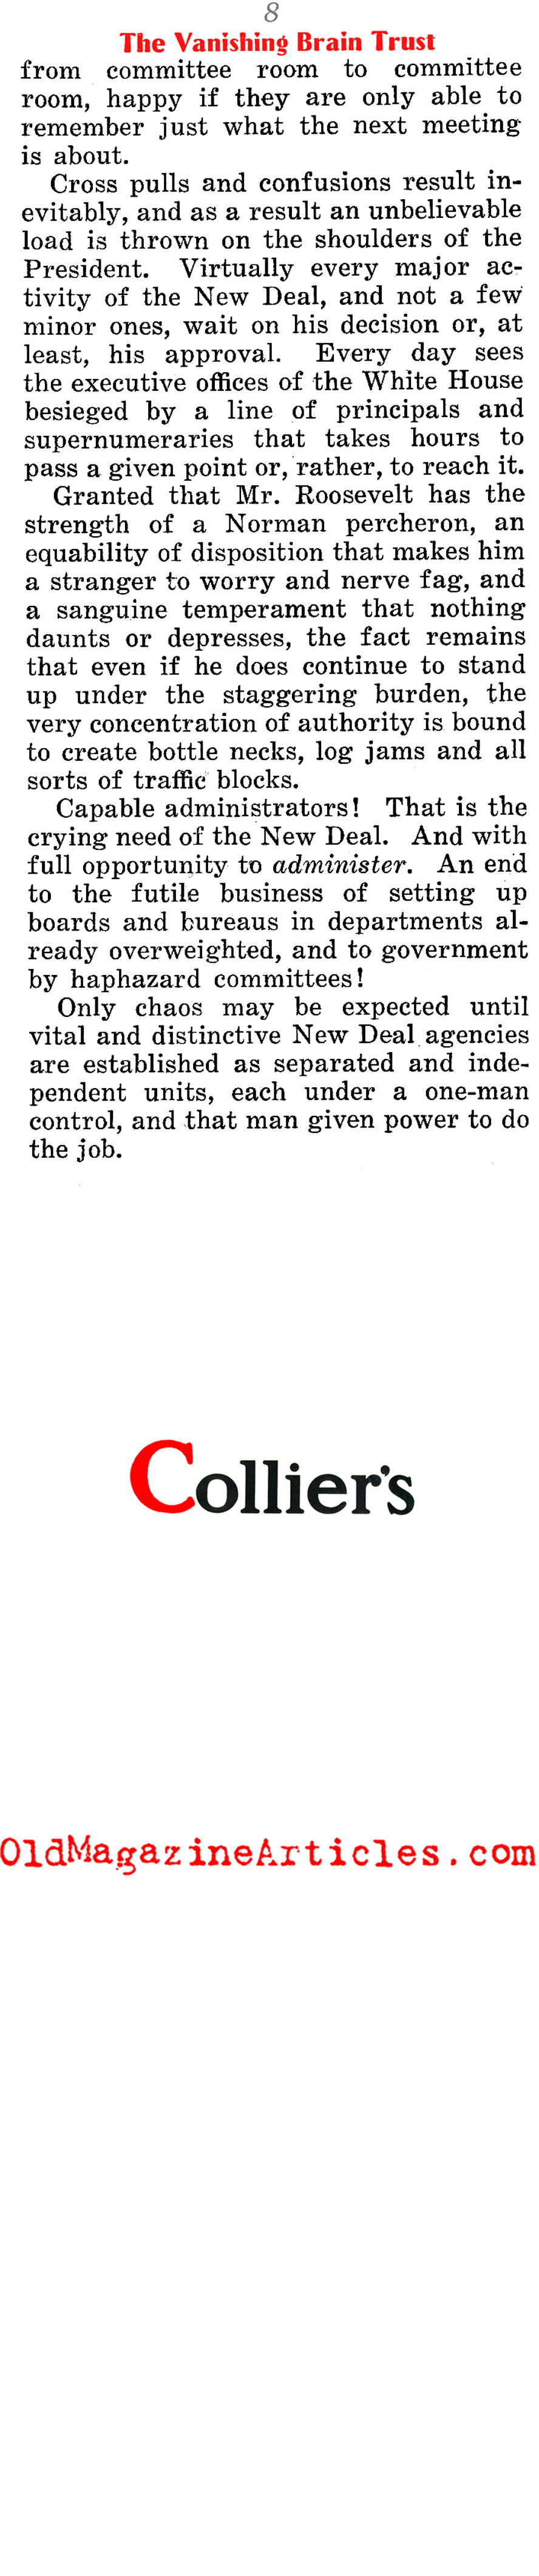 Amateurs All (Collier's Magazine, 1935)